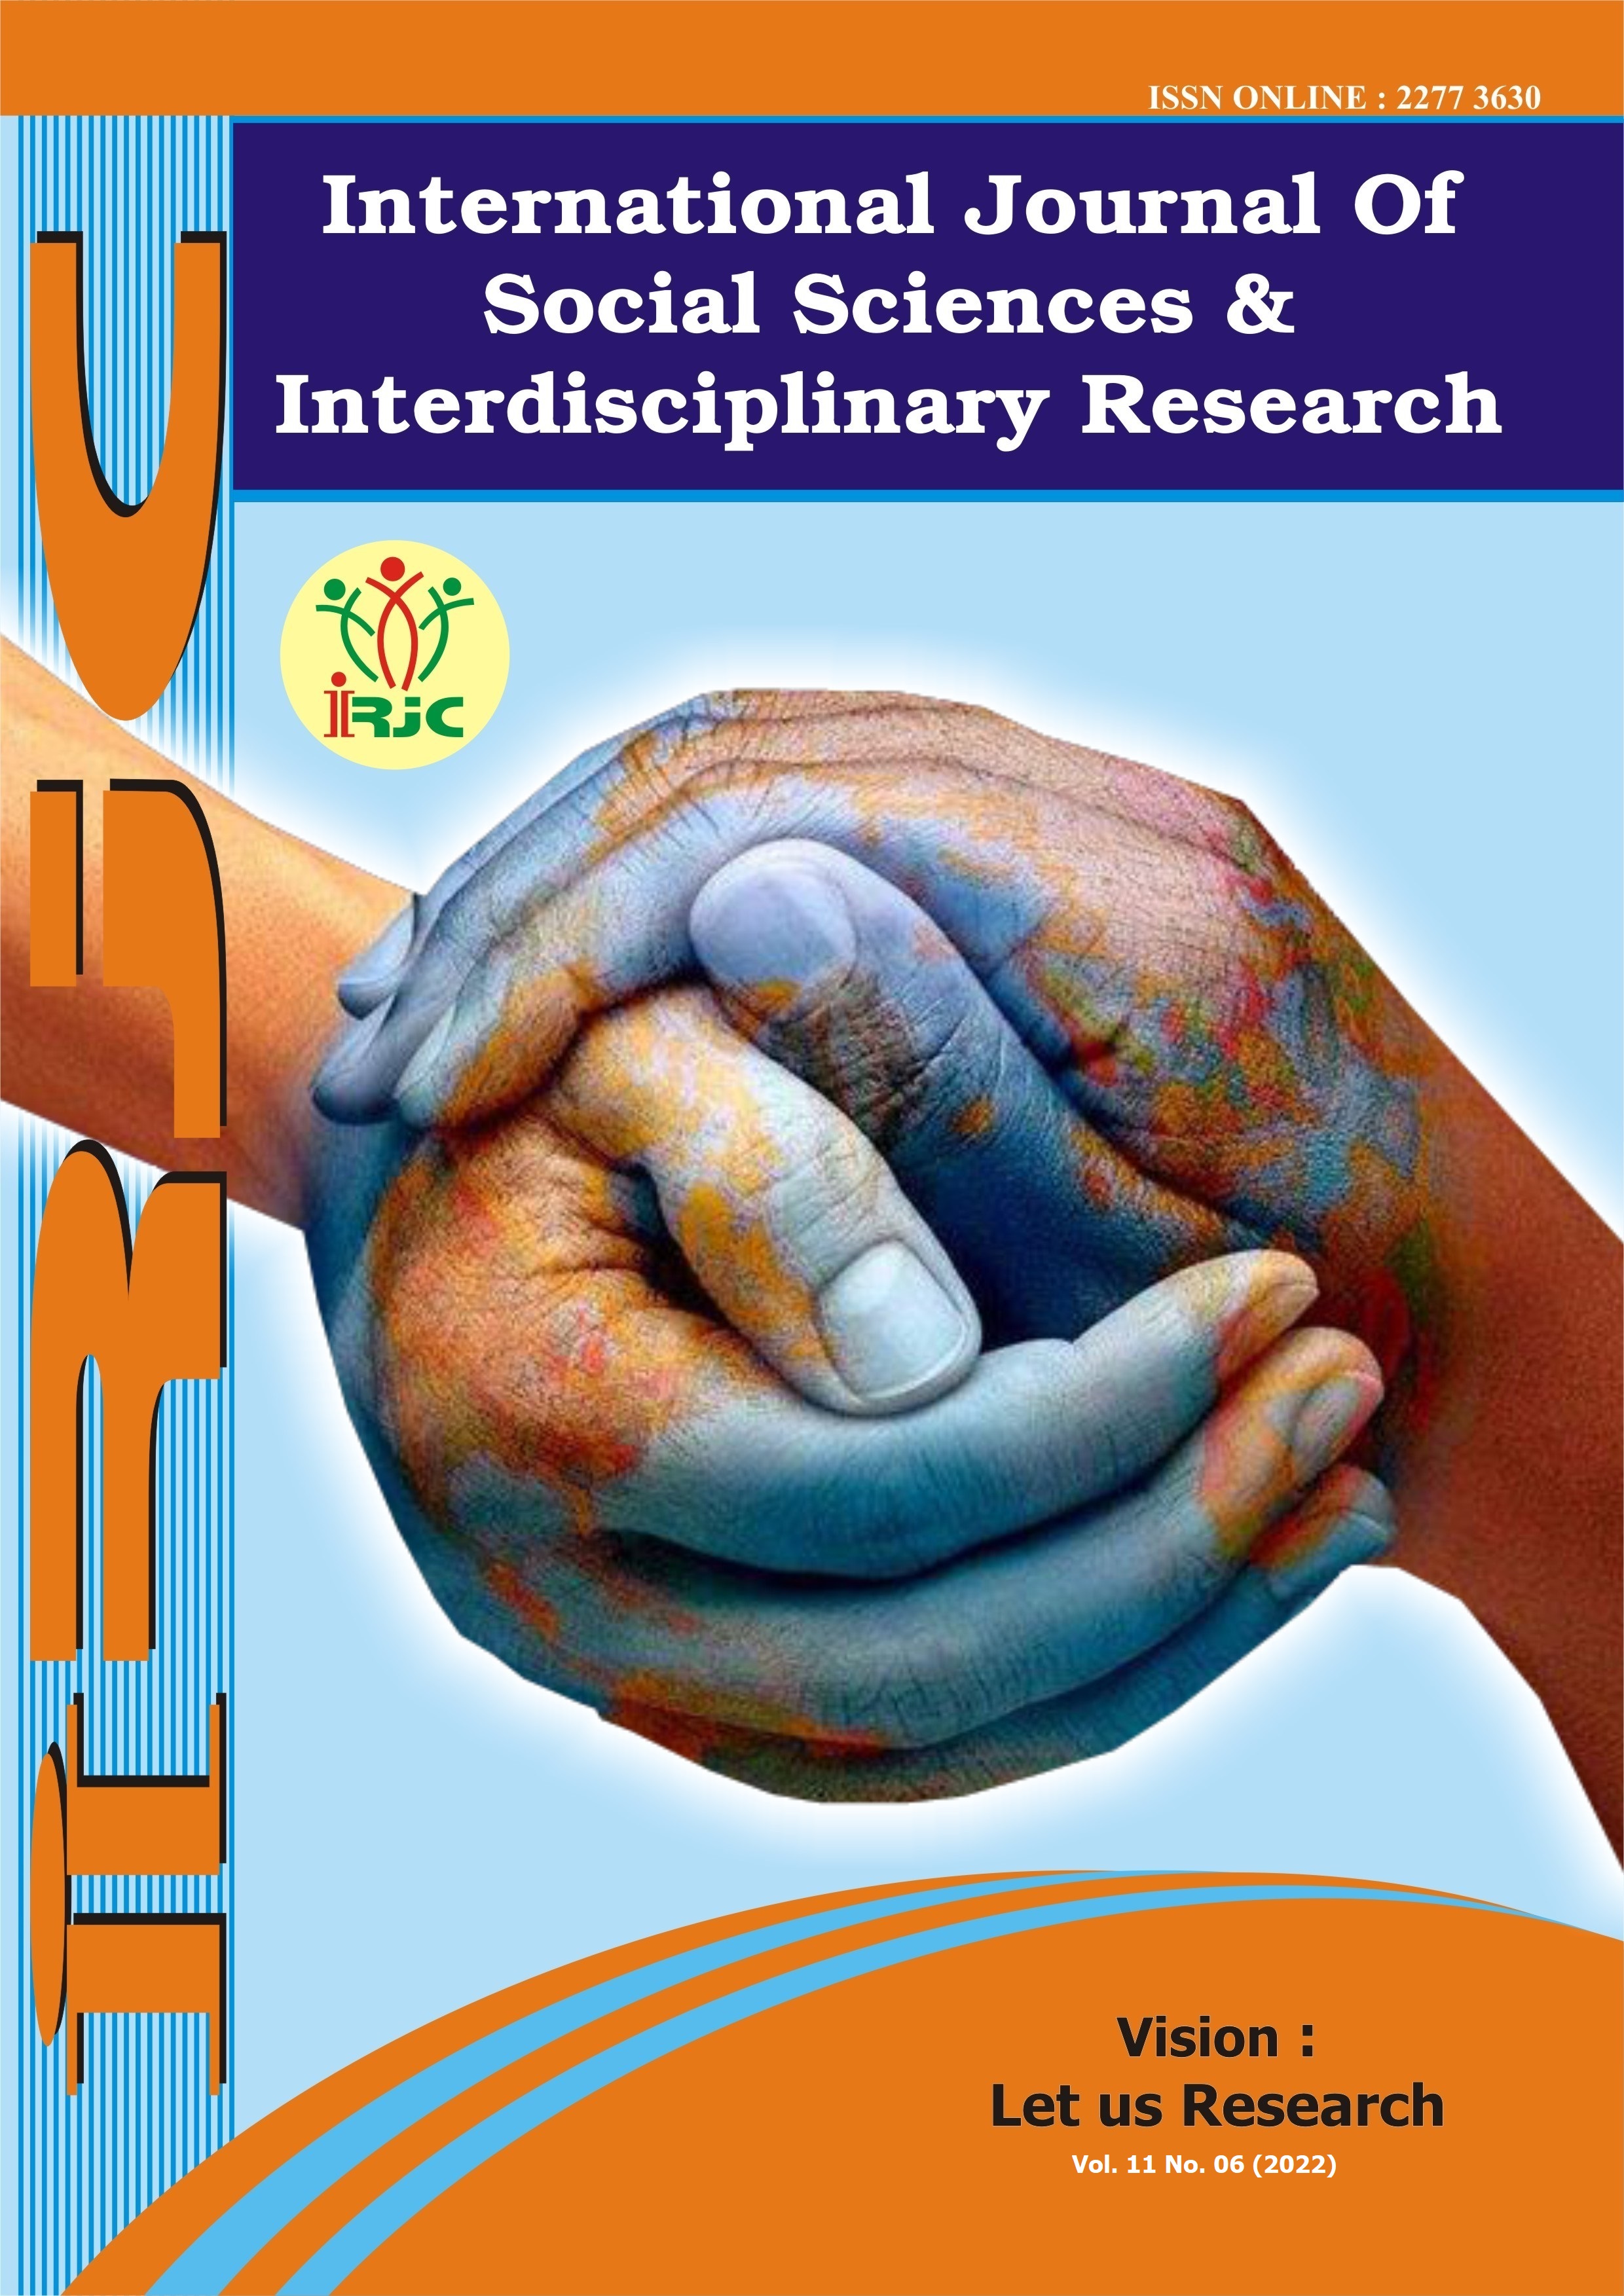 					View Vol. 11 No. 07 (2022): INTERNATIONAL JOURNAL OF SOCIAL SCIENCE & INTERDISCIPLINARY RESEARCH
				